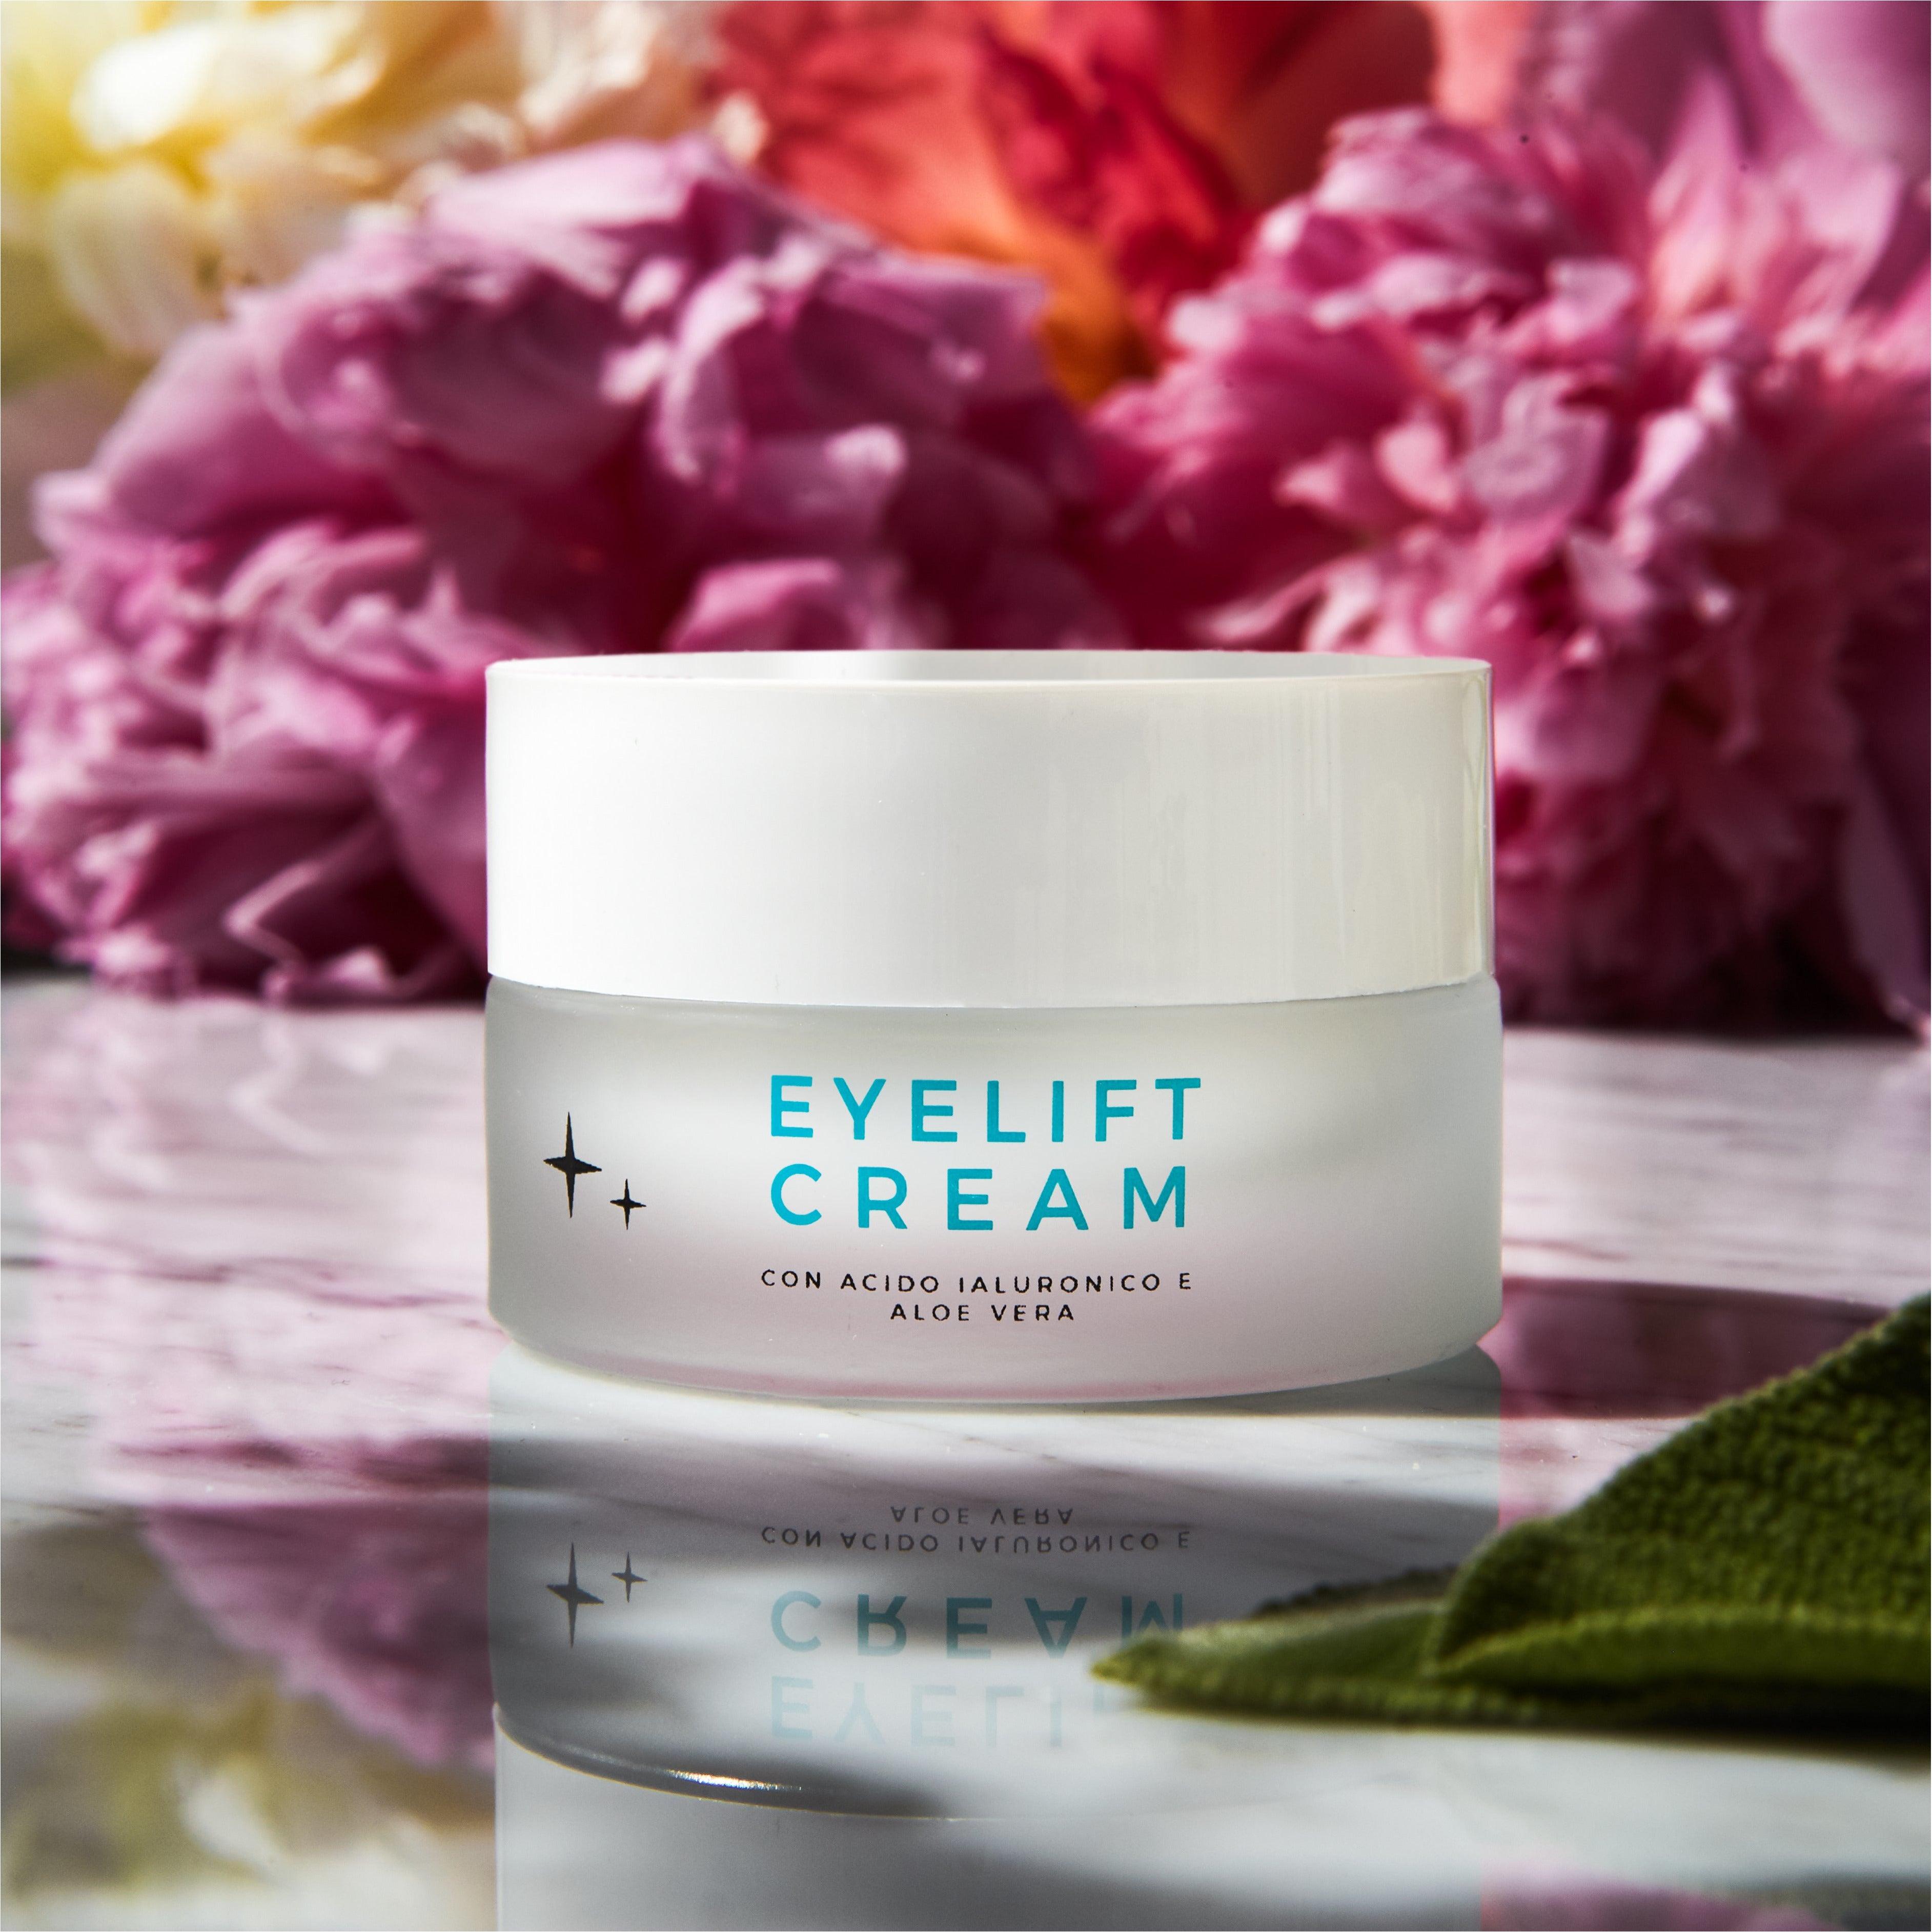 Eyelift Cream - Ingredienti floreali - Luce Beauty by Alessia Marcuzzi